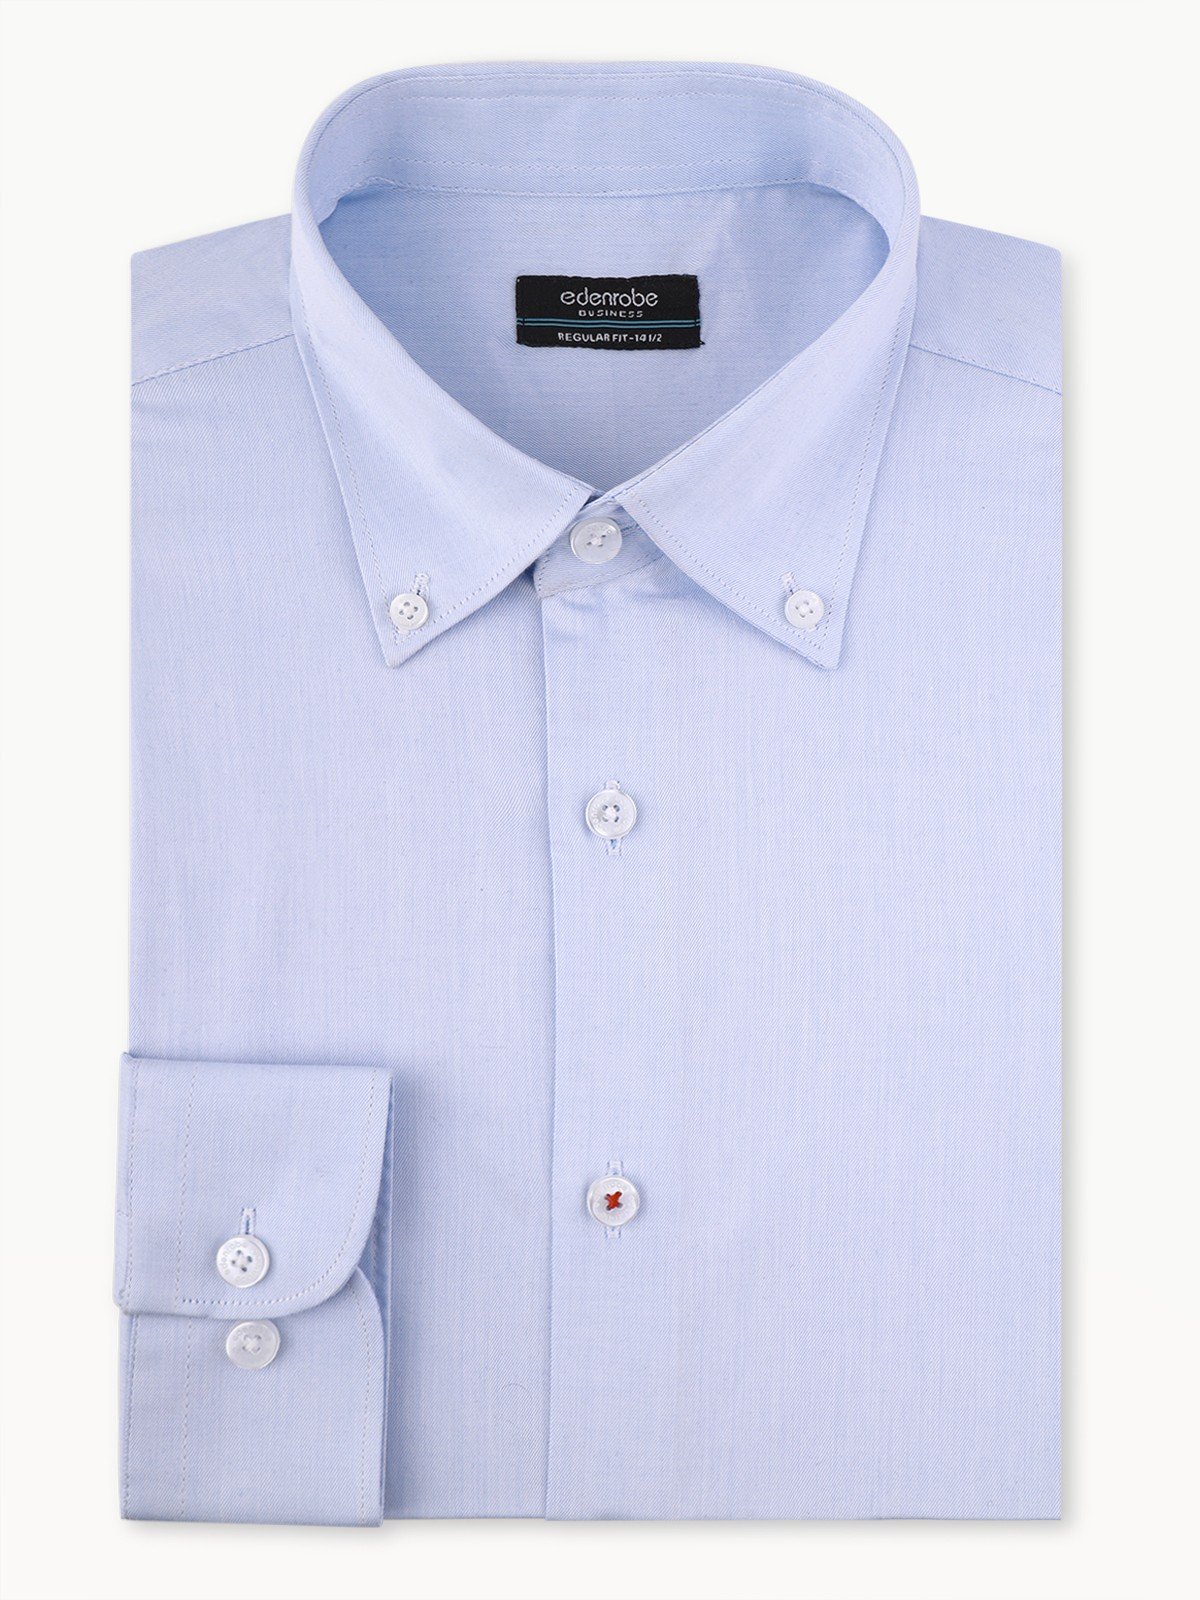 Men's Light Blue Shirt Plain - EMTSB22-095